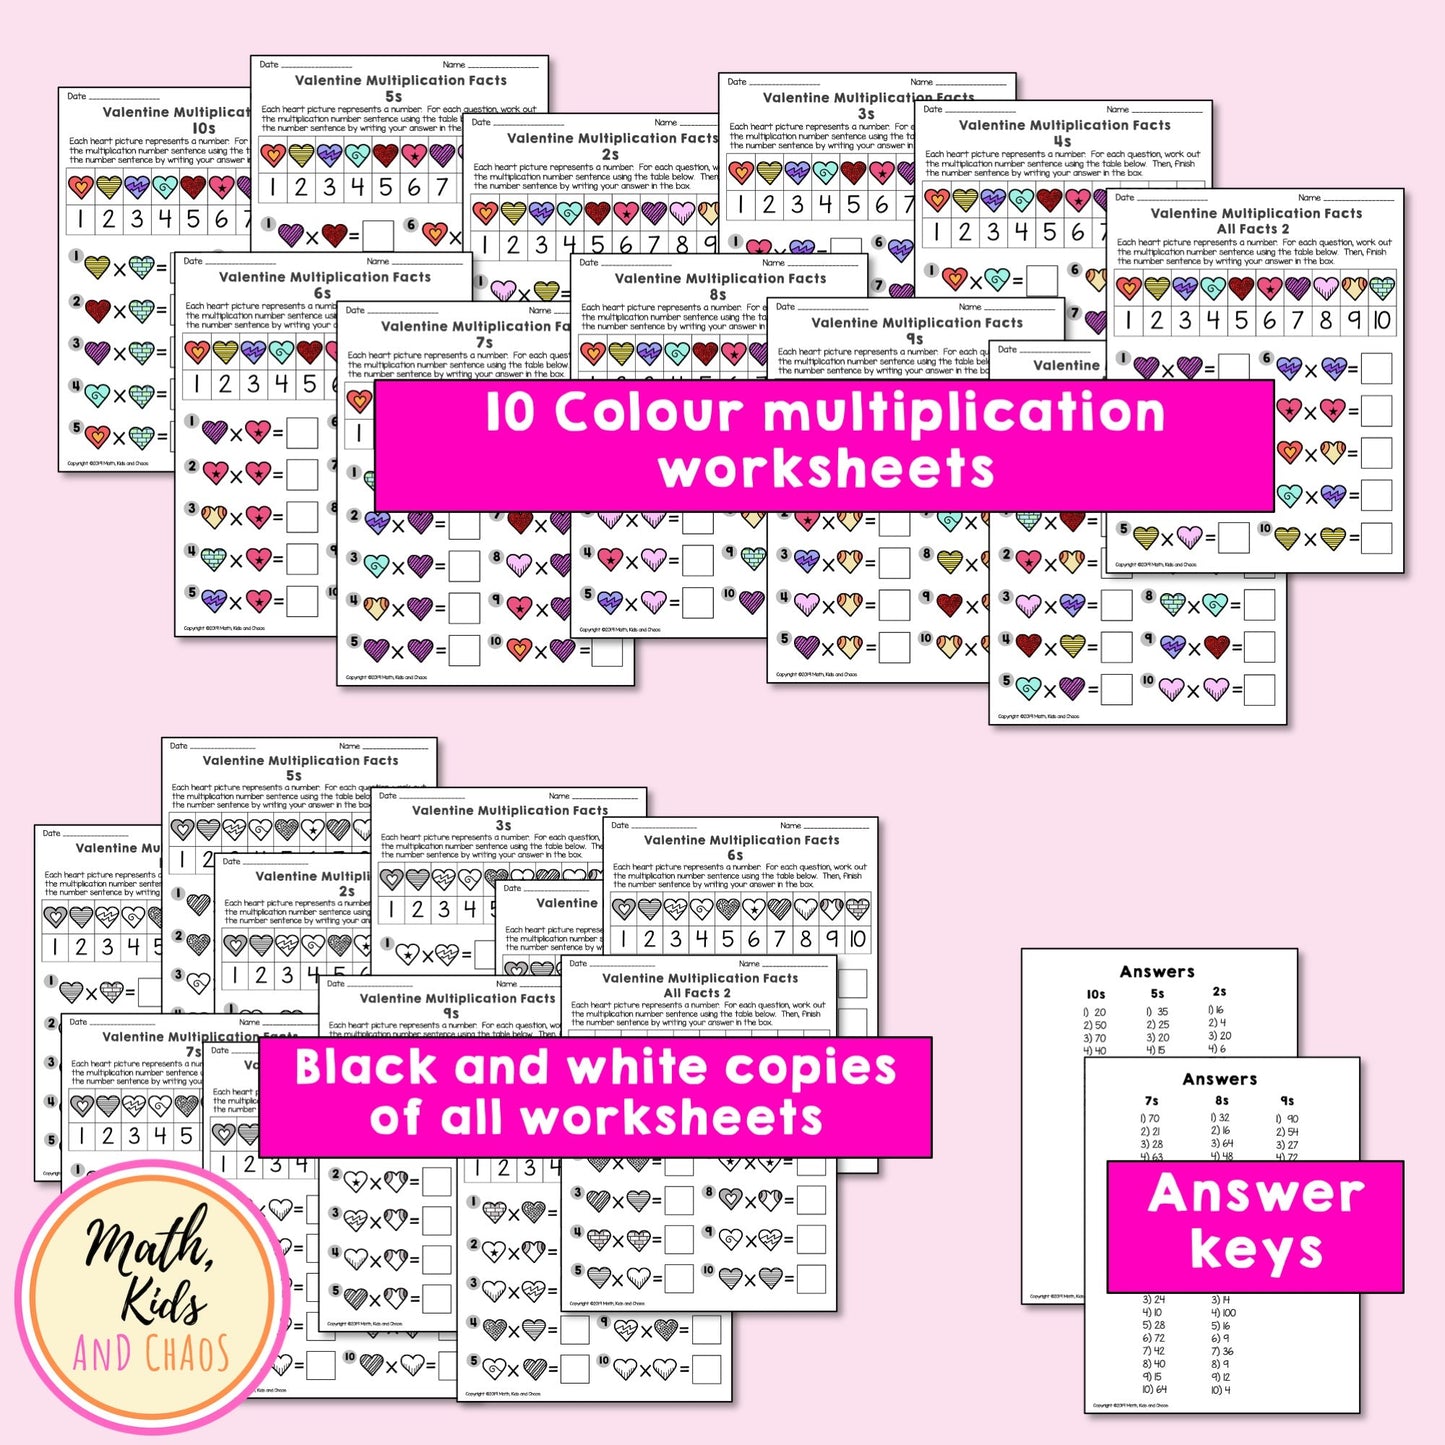 Valentine multiplication facts worksheets